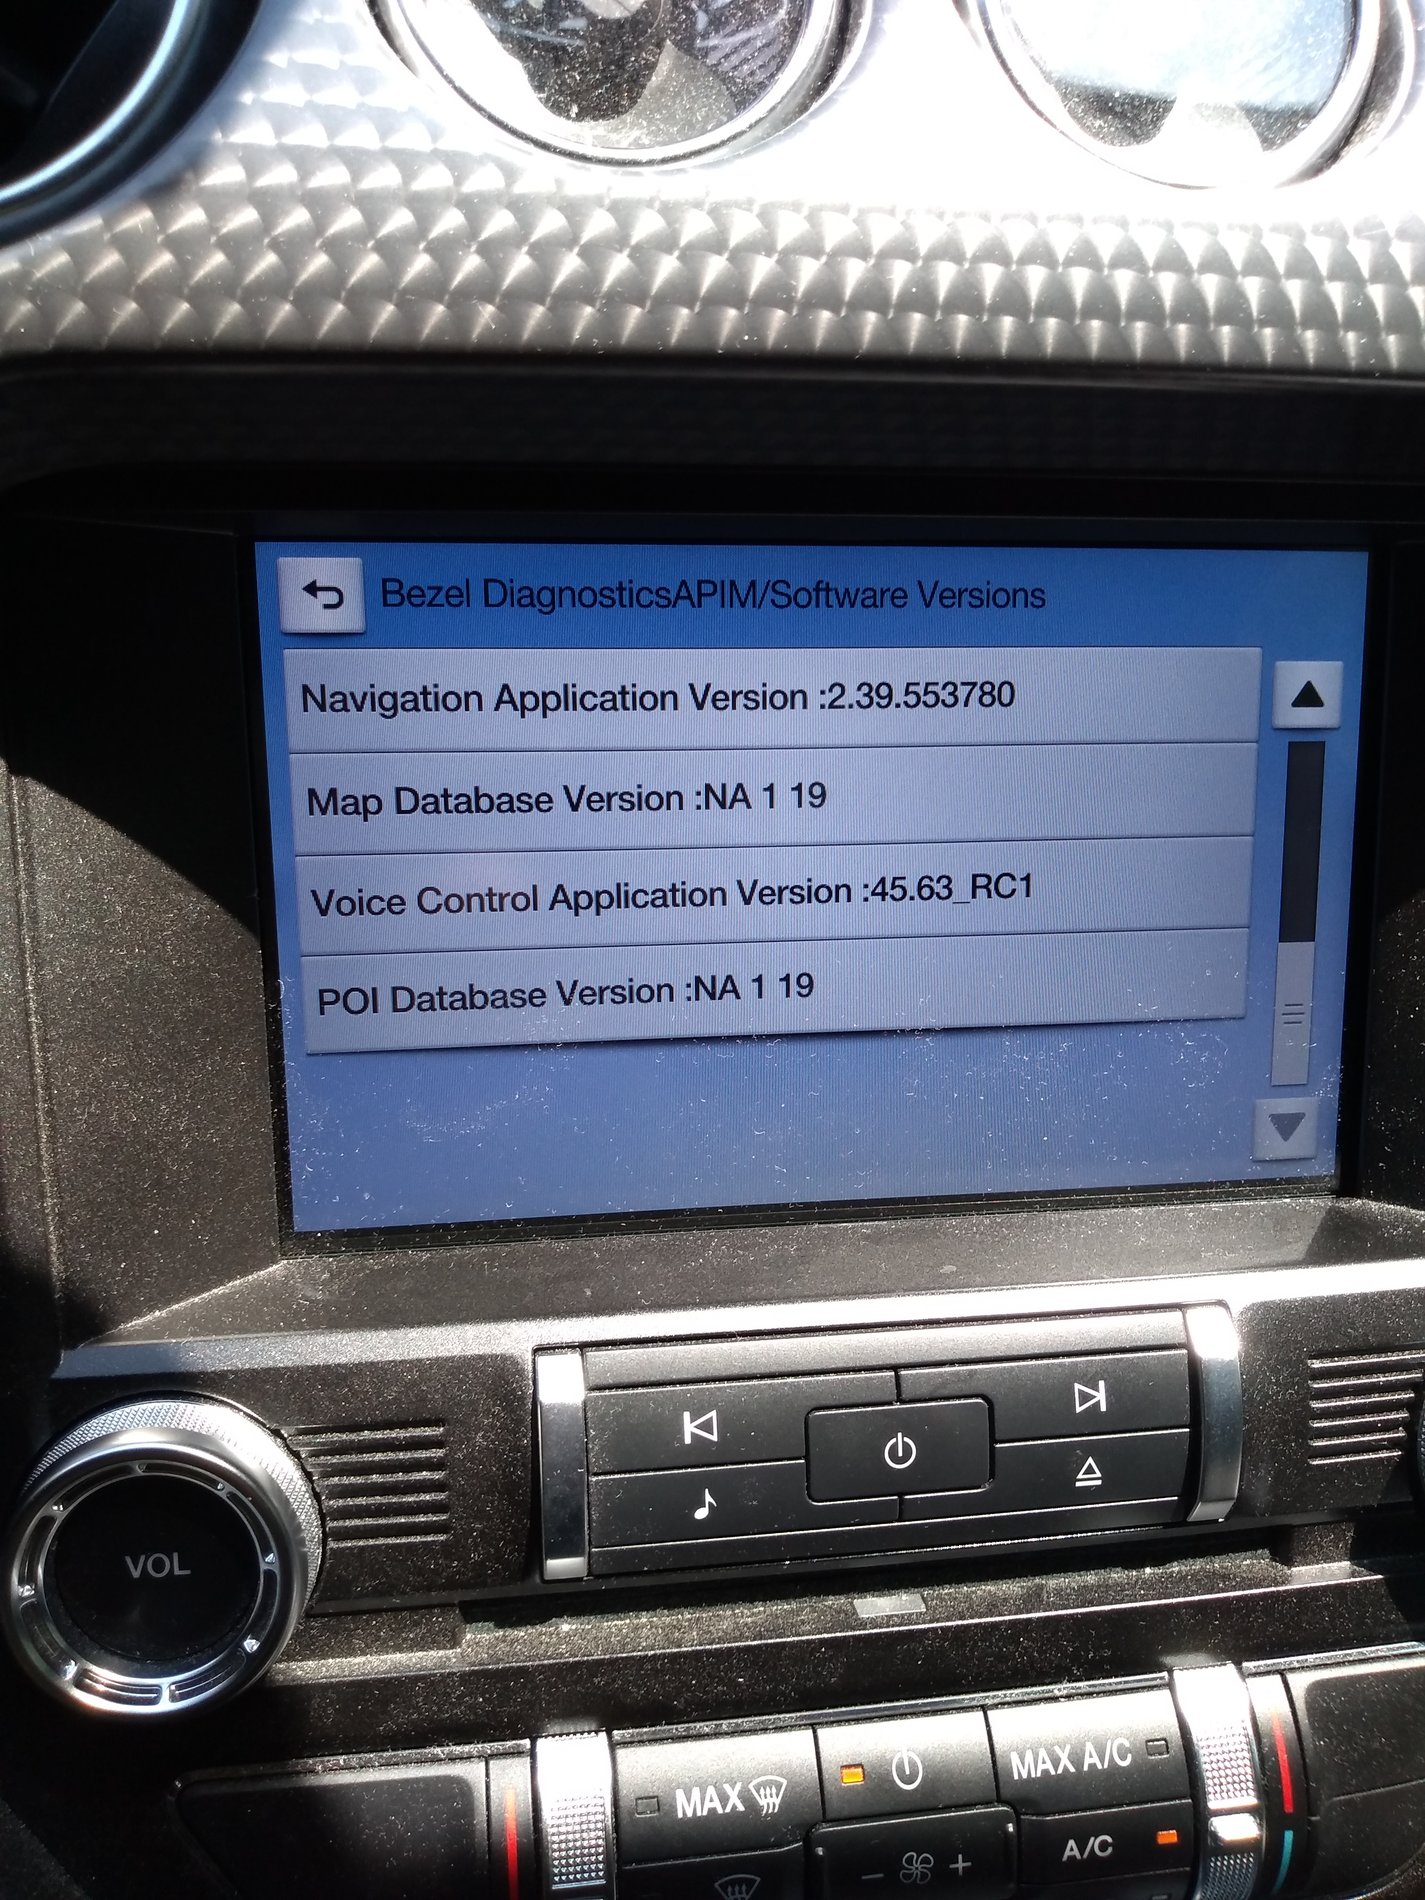 2018 Mustang GT - No Nav Voice Control.jpg